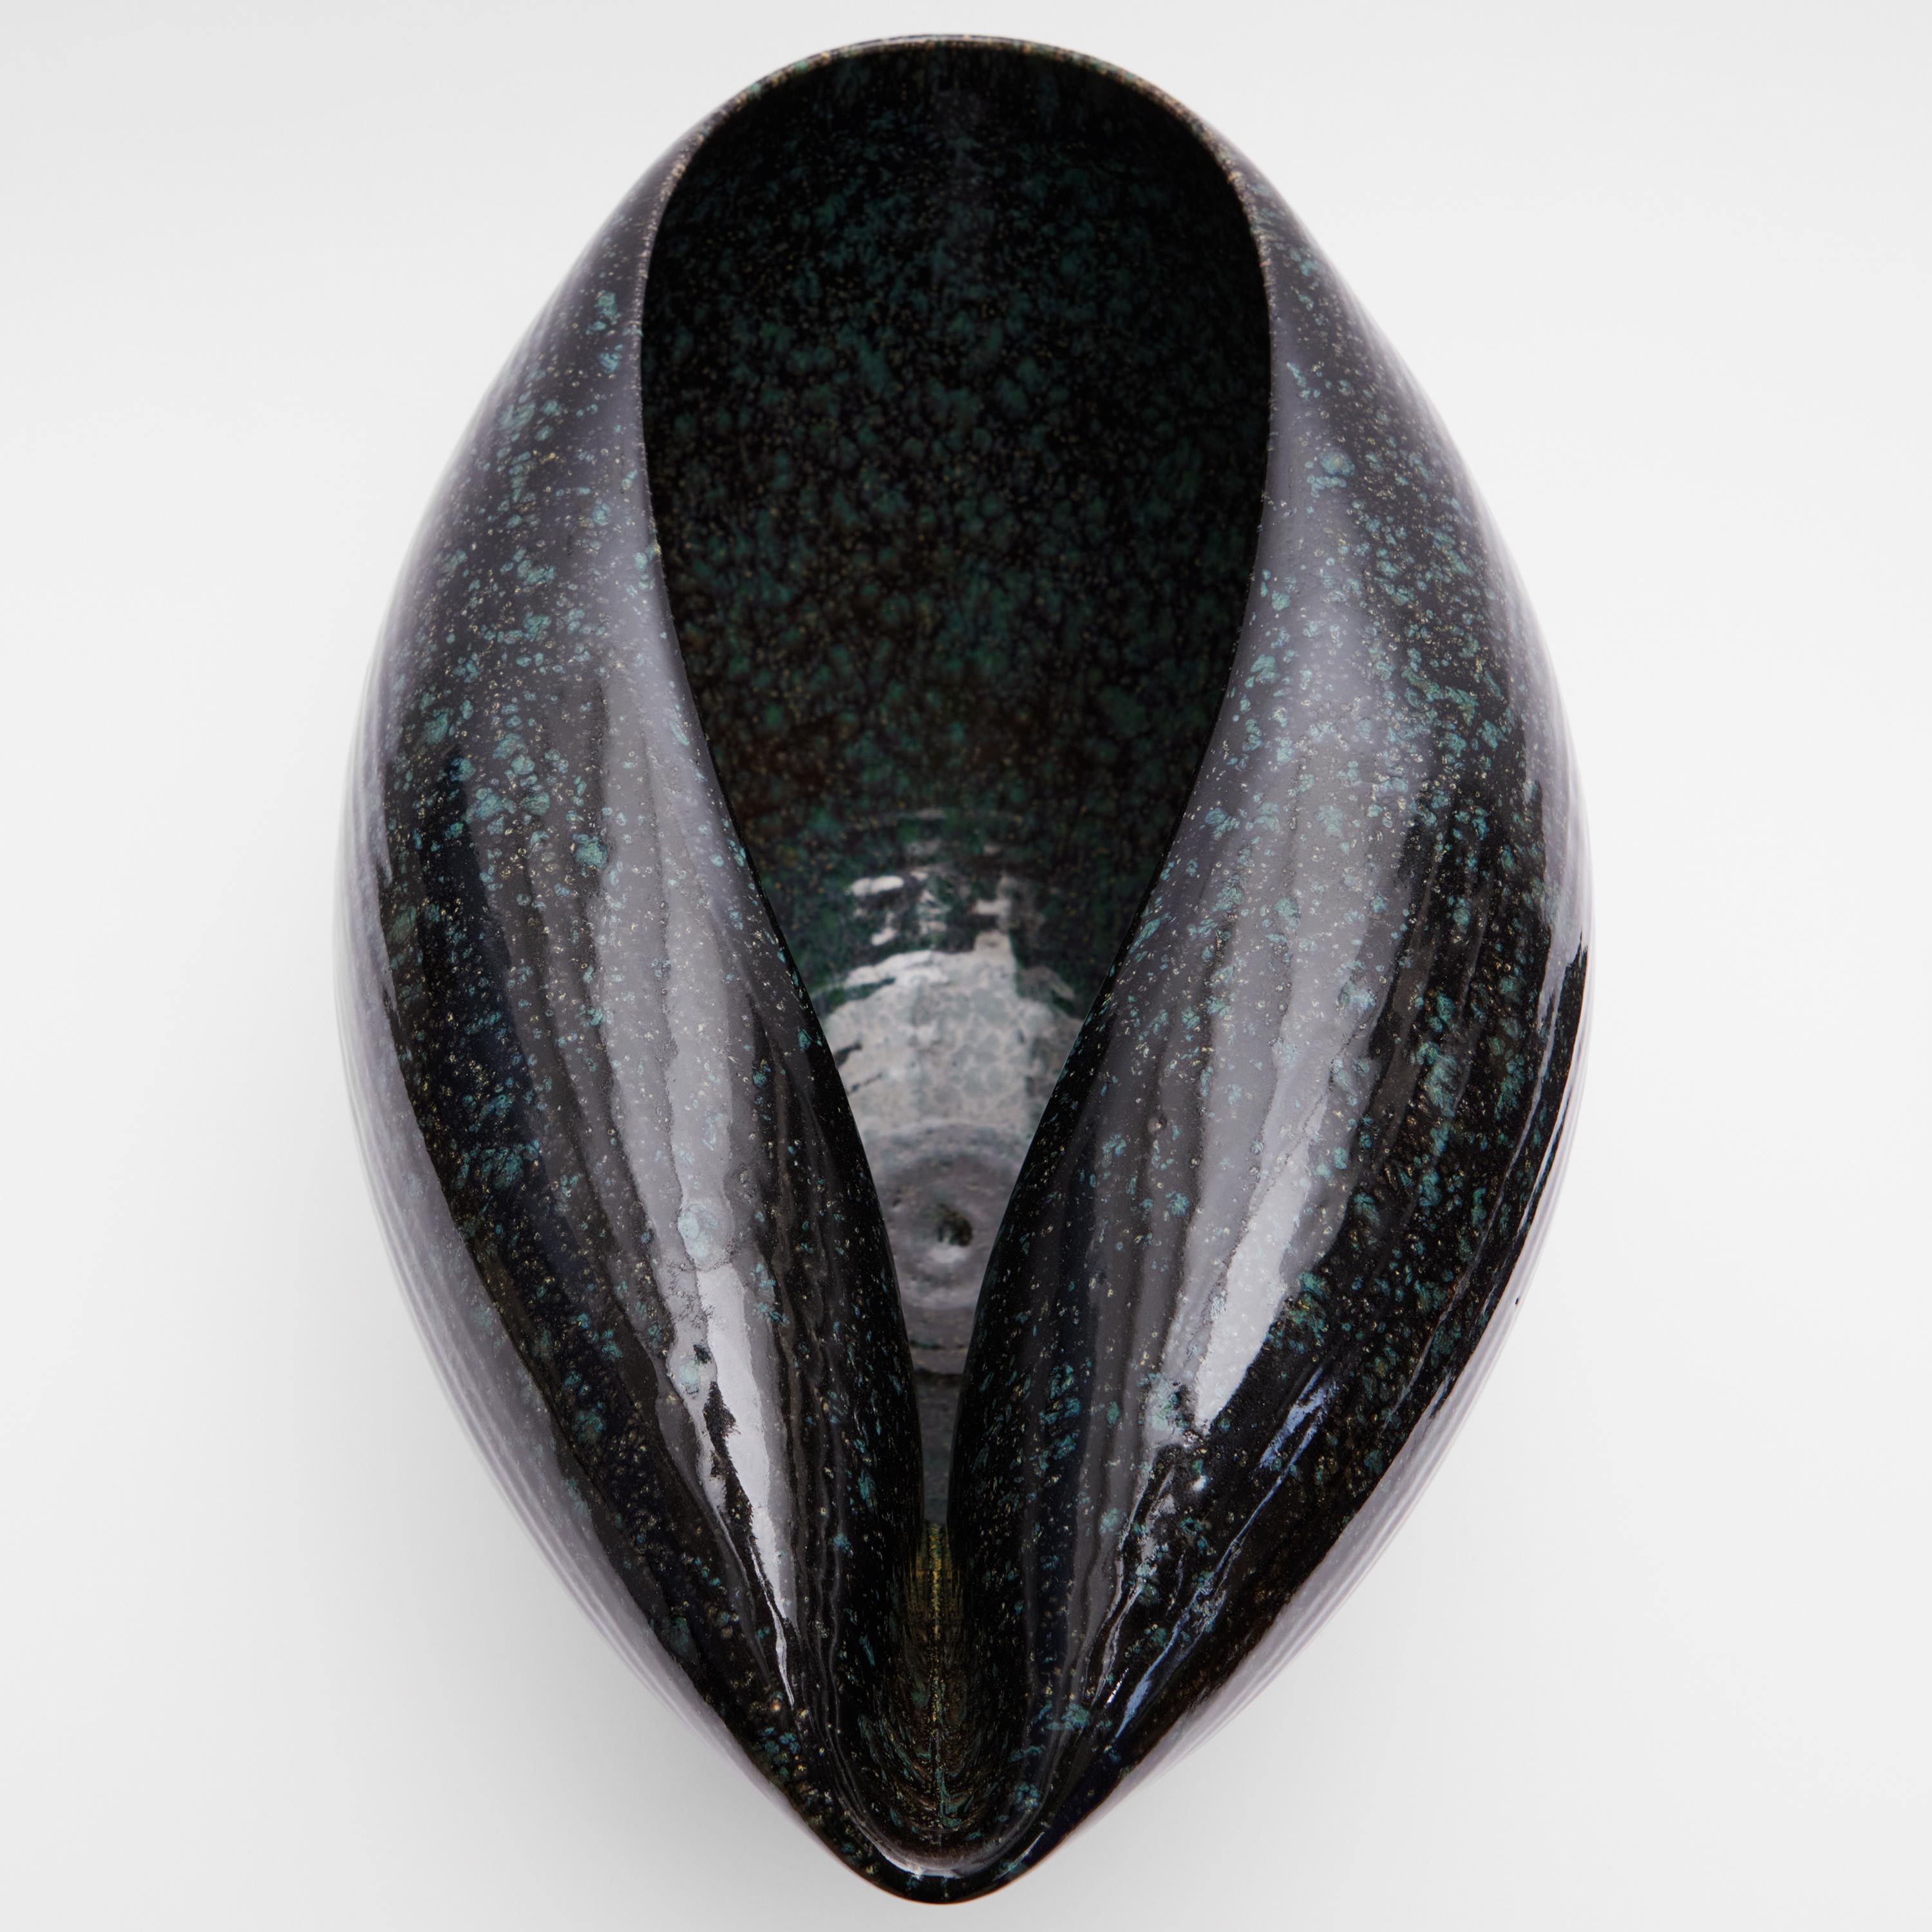 Medium Large Black Cosmic Oval Open Form, Vessel No.106, Ceramic Sculpture For Sale 1